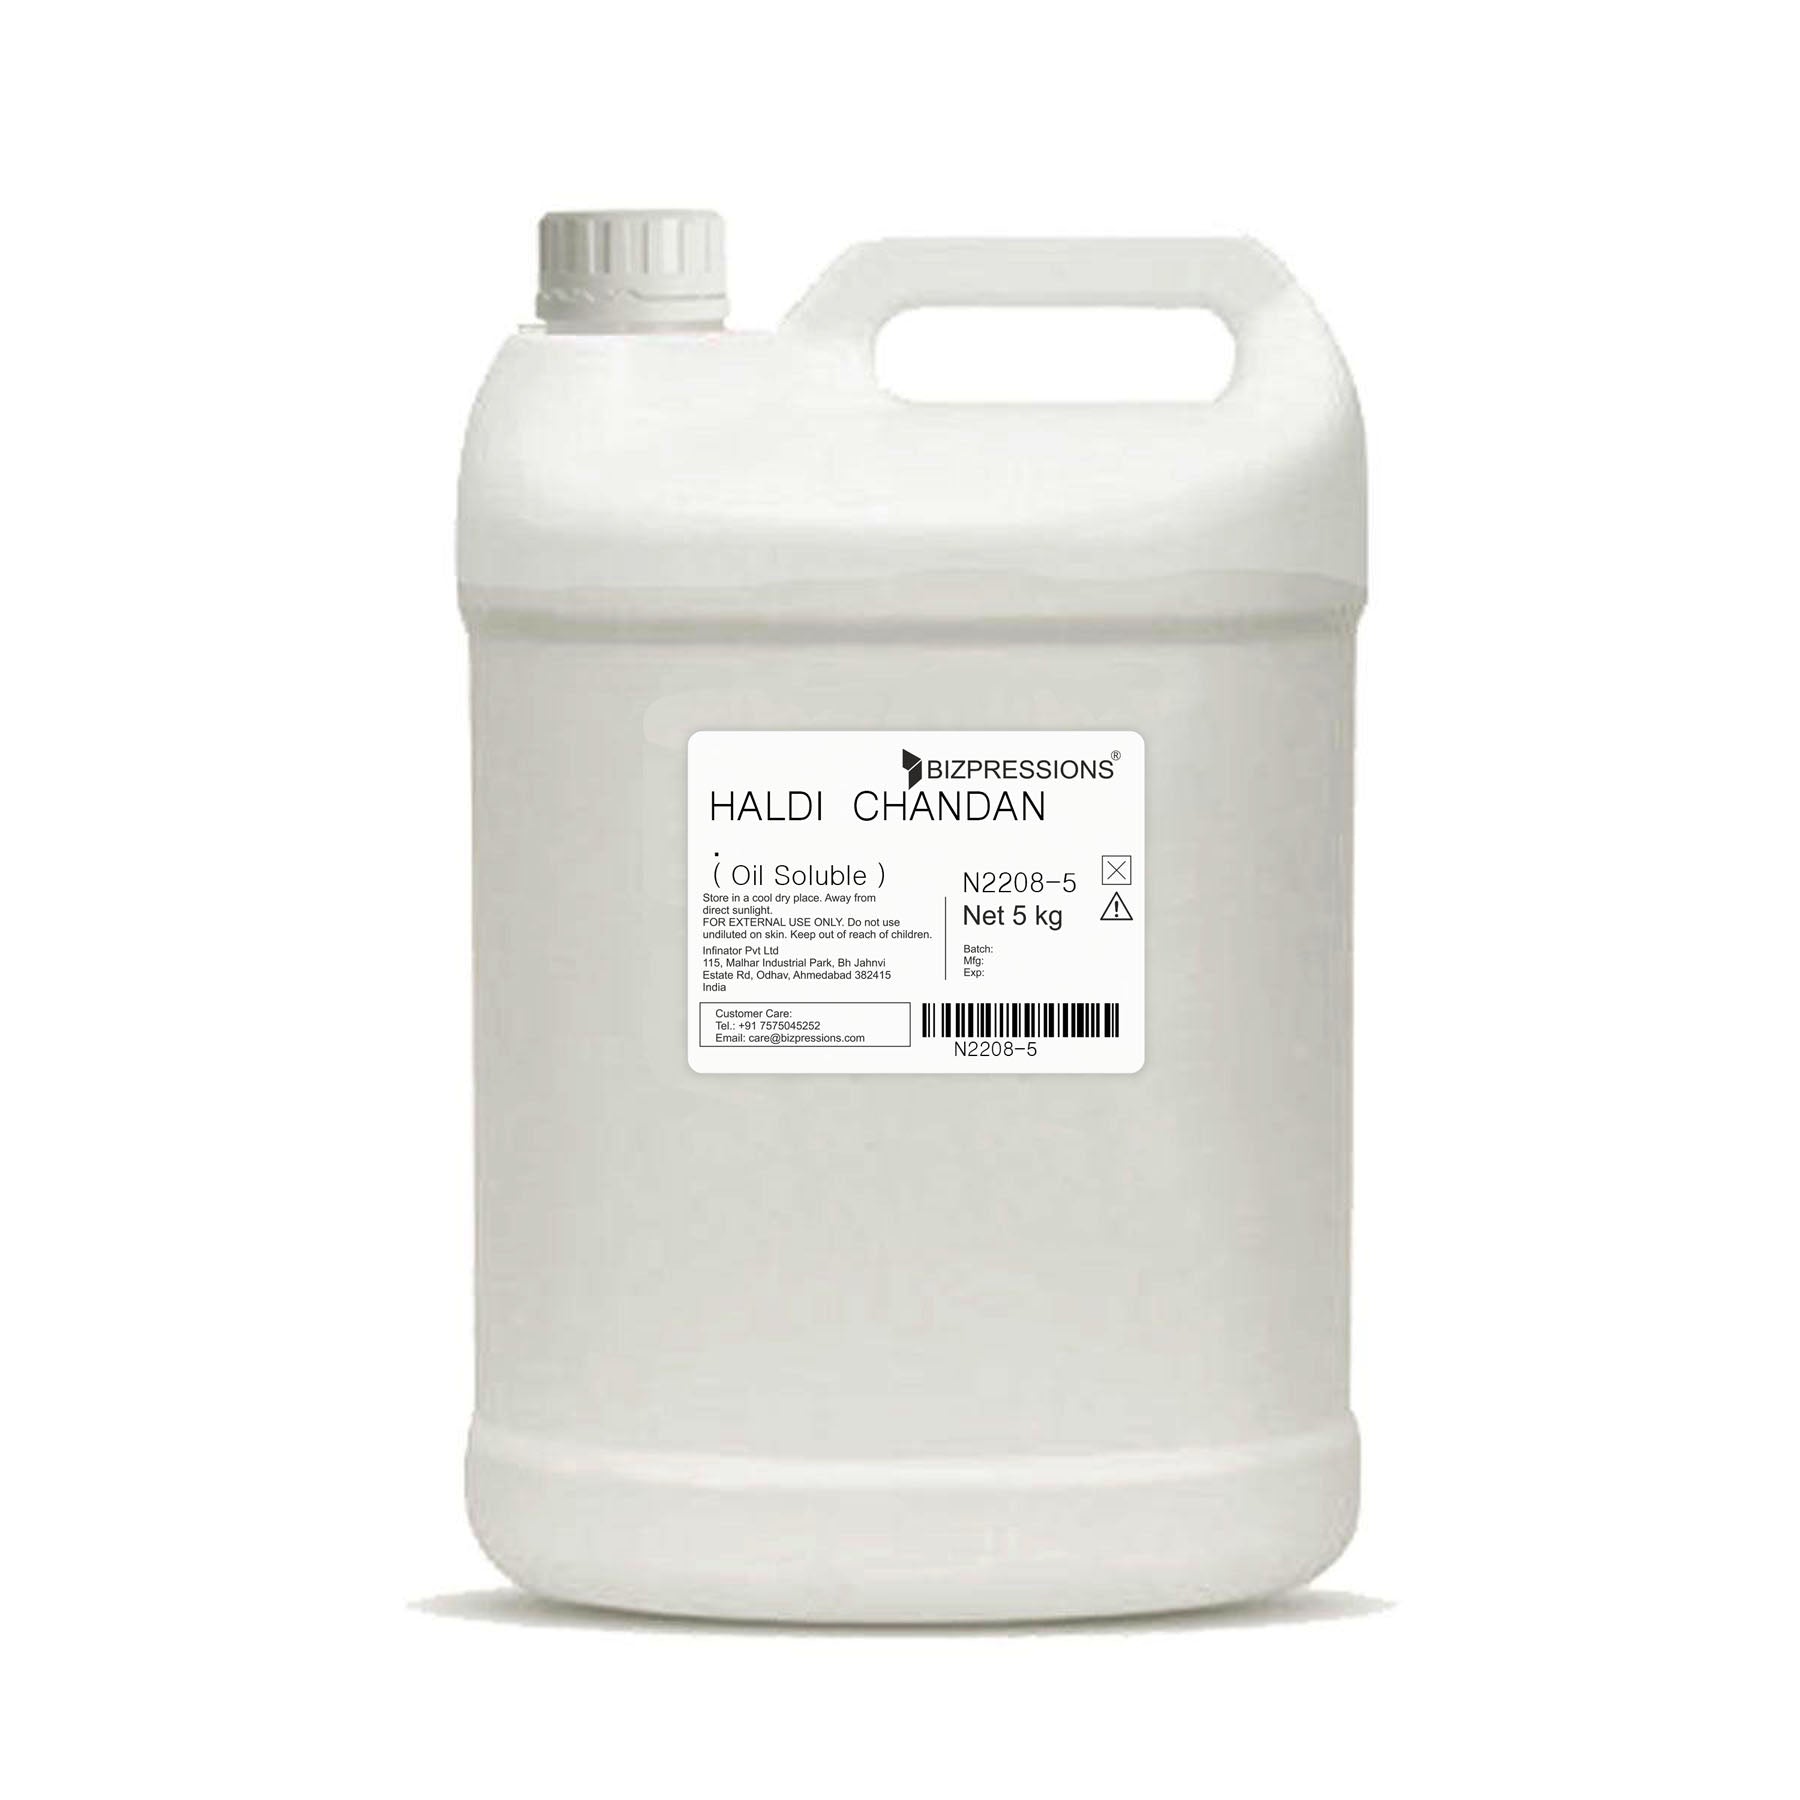 HALDI CHANDAN - Fragrance ( Oil Soluble ) - 5 kg